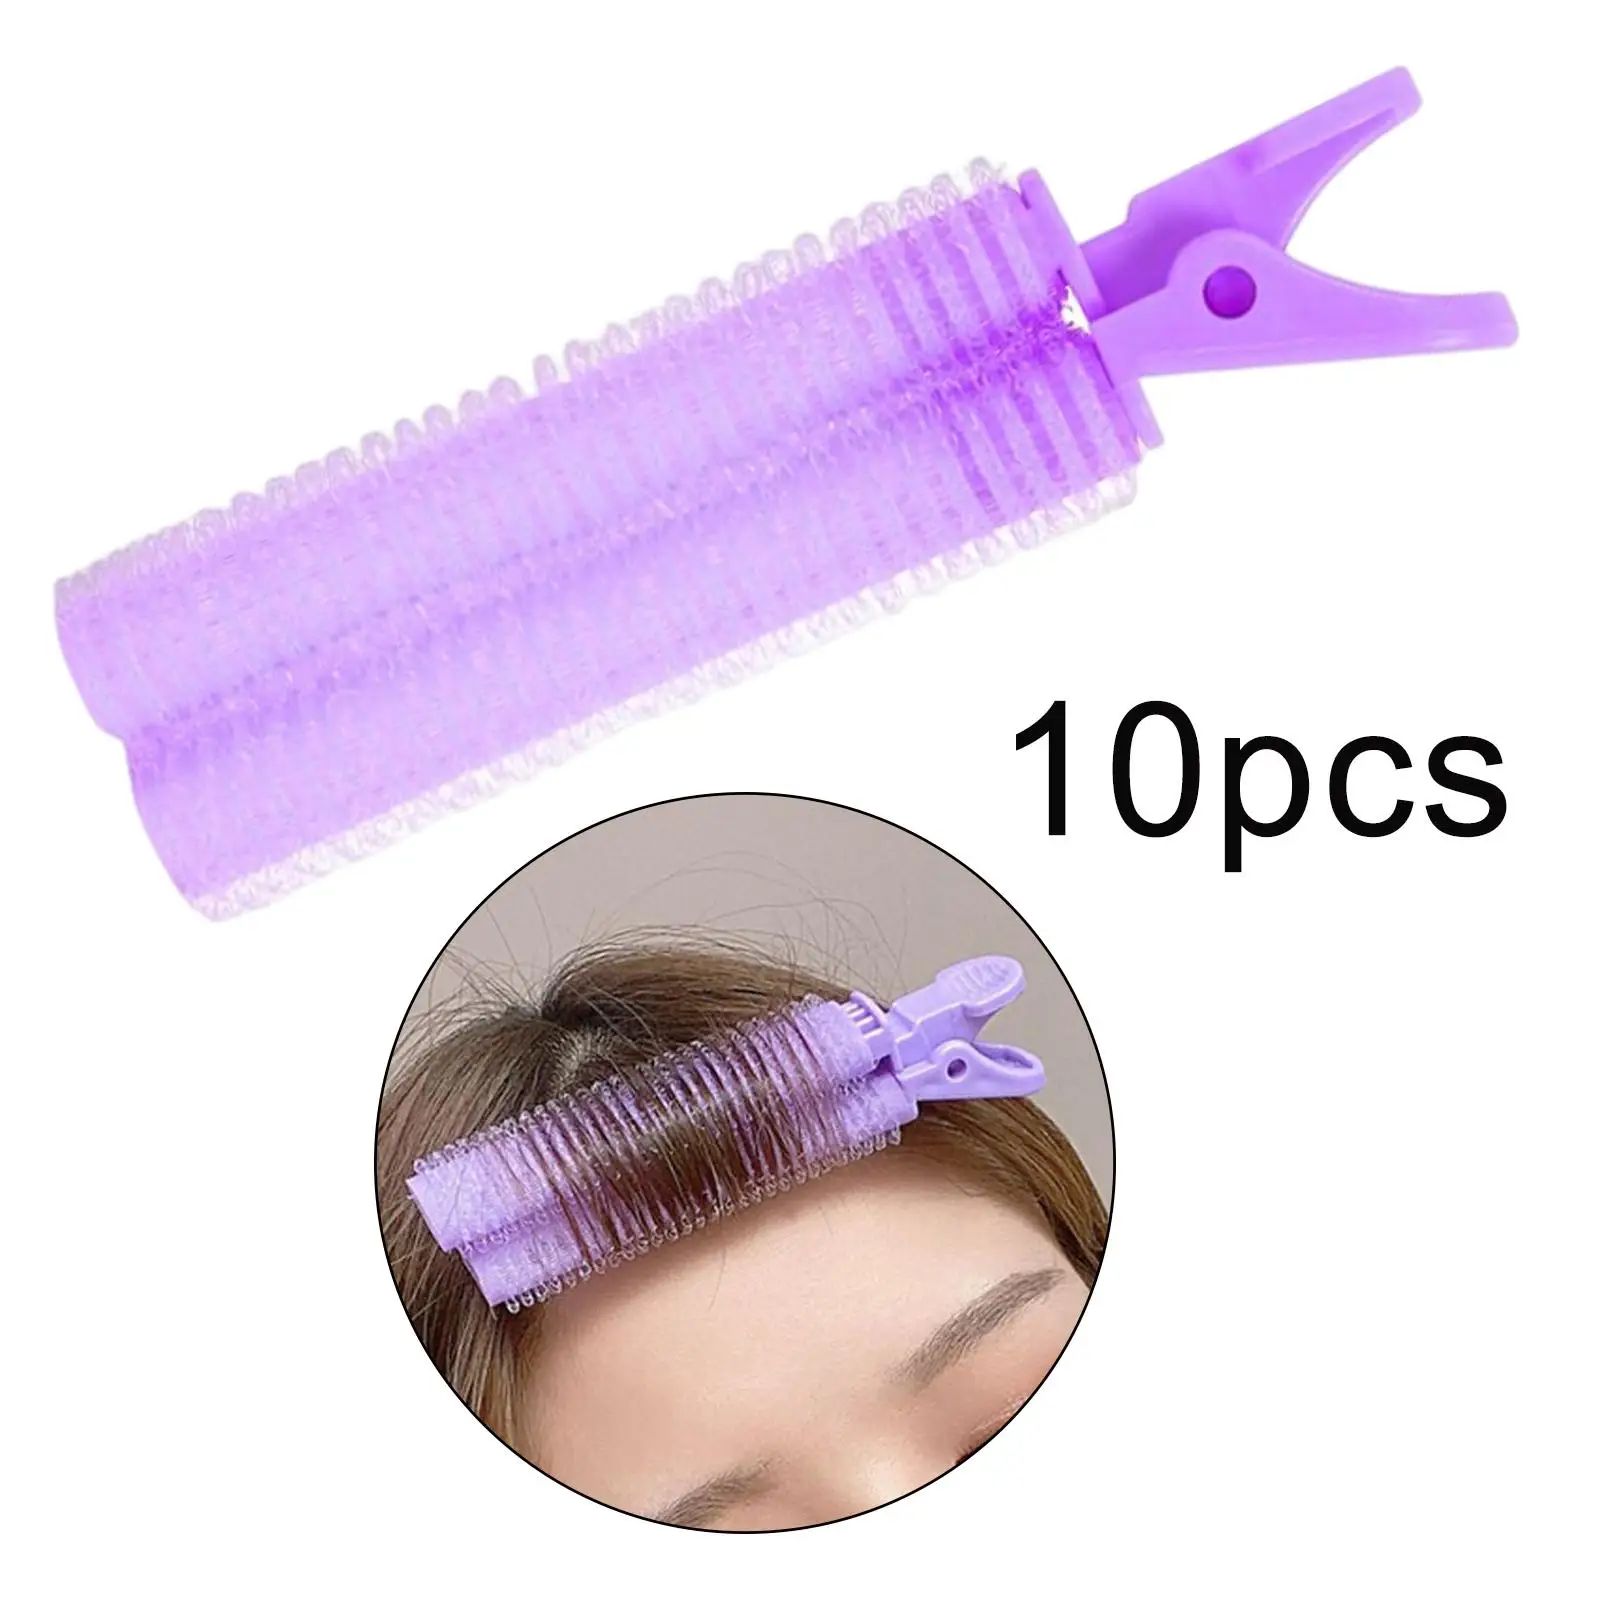 Hair Bangs Curling Clips Hair Curler Curler Barrel for Hair Styling